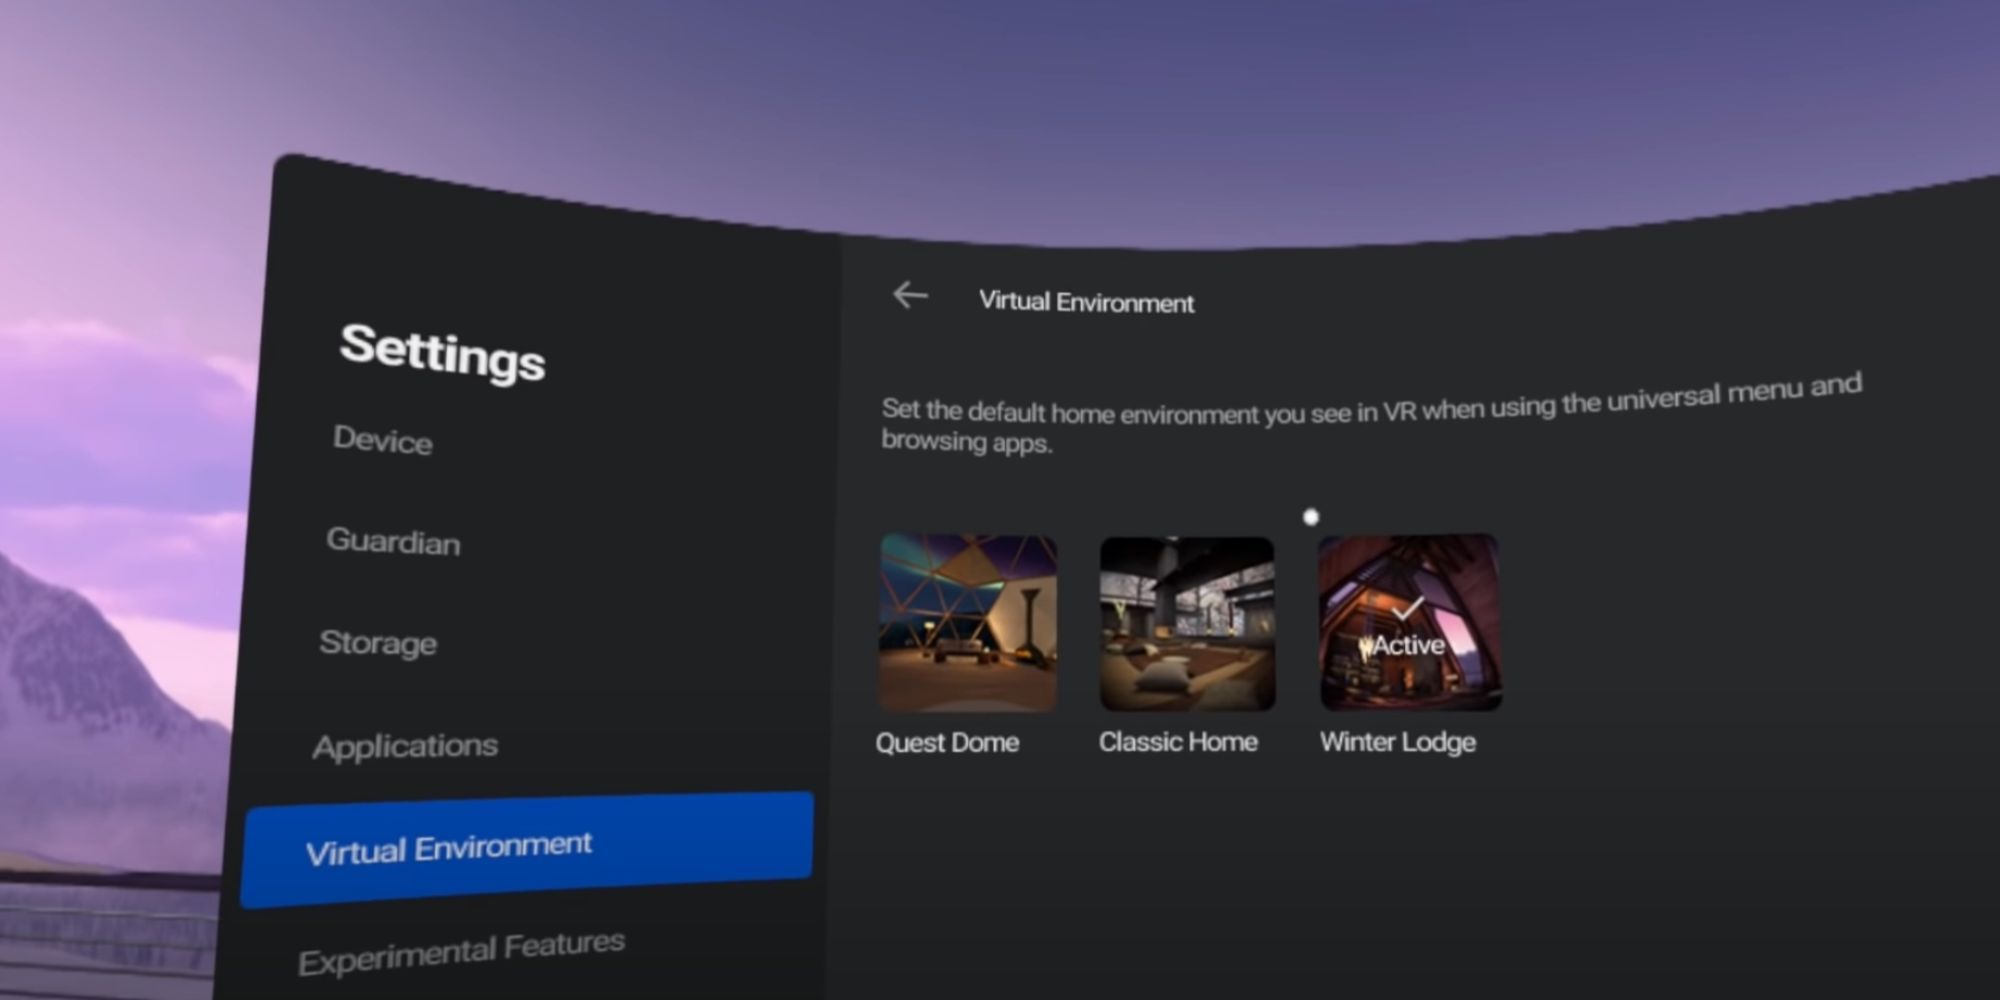 Oculus quest 2 включить режим разработчика